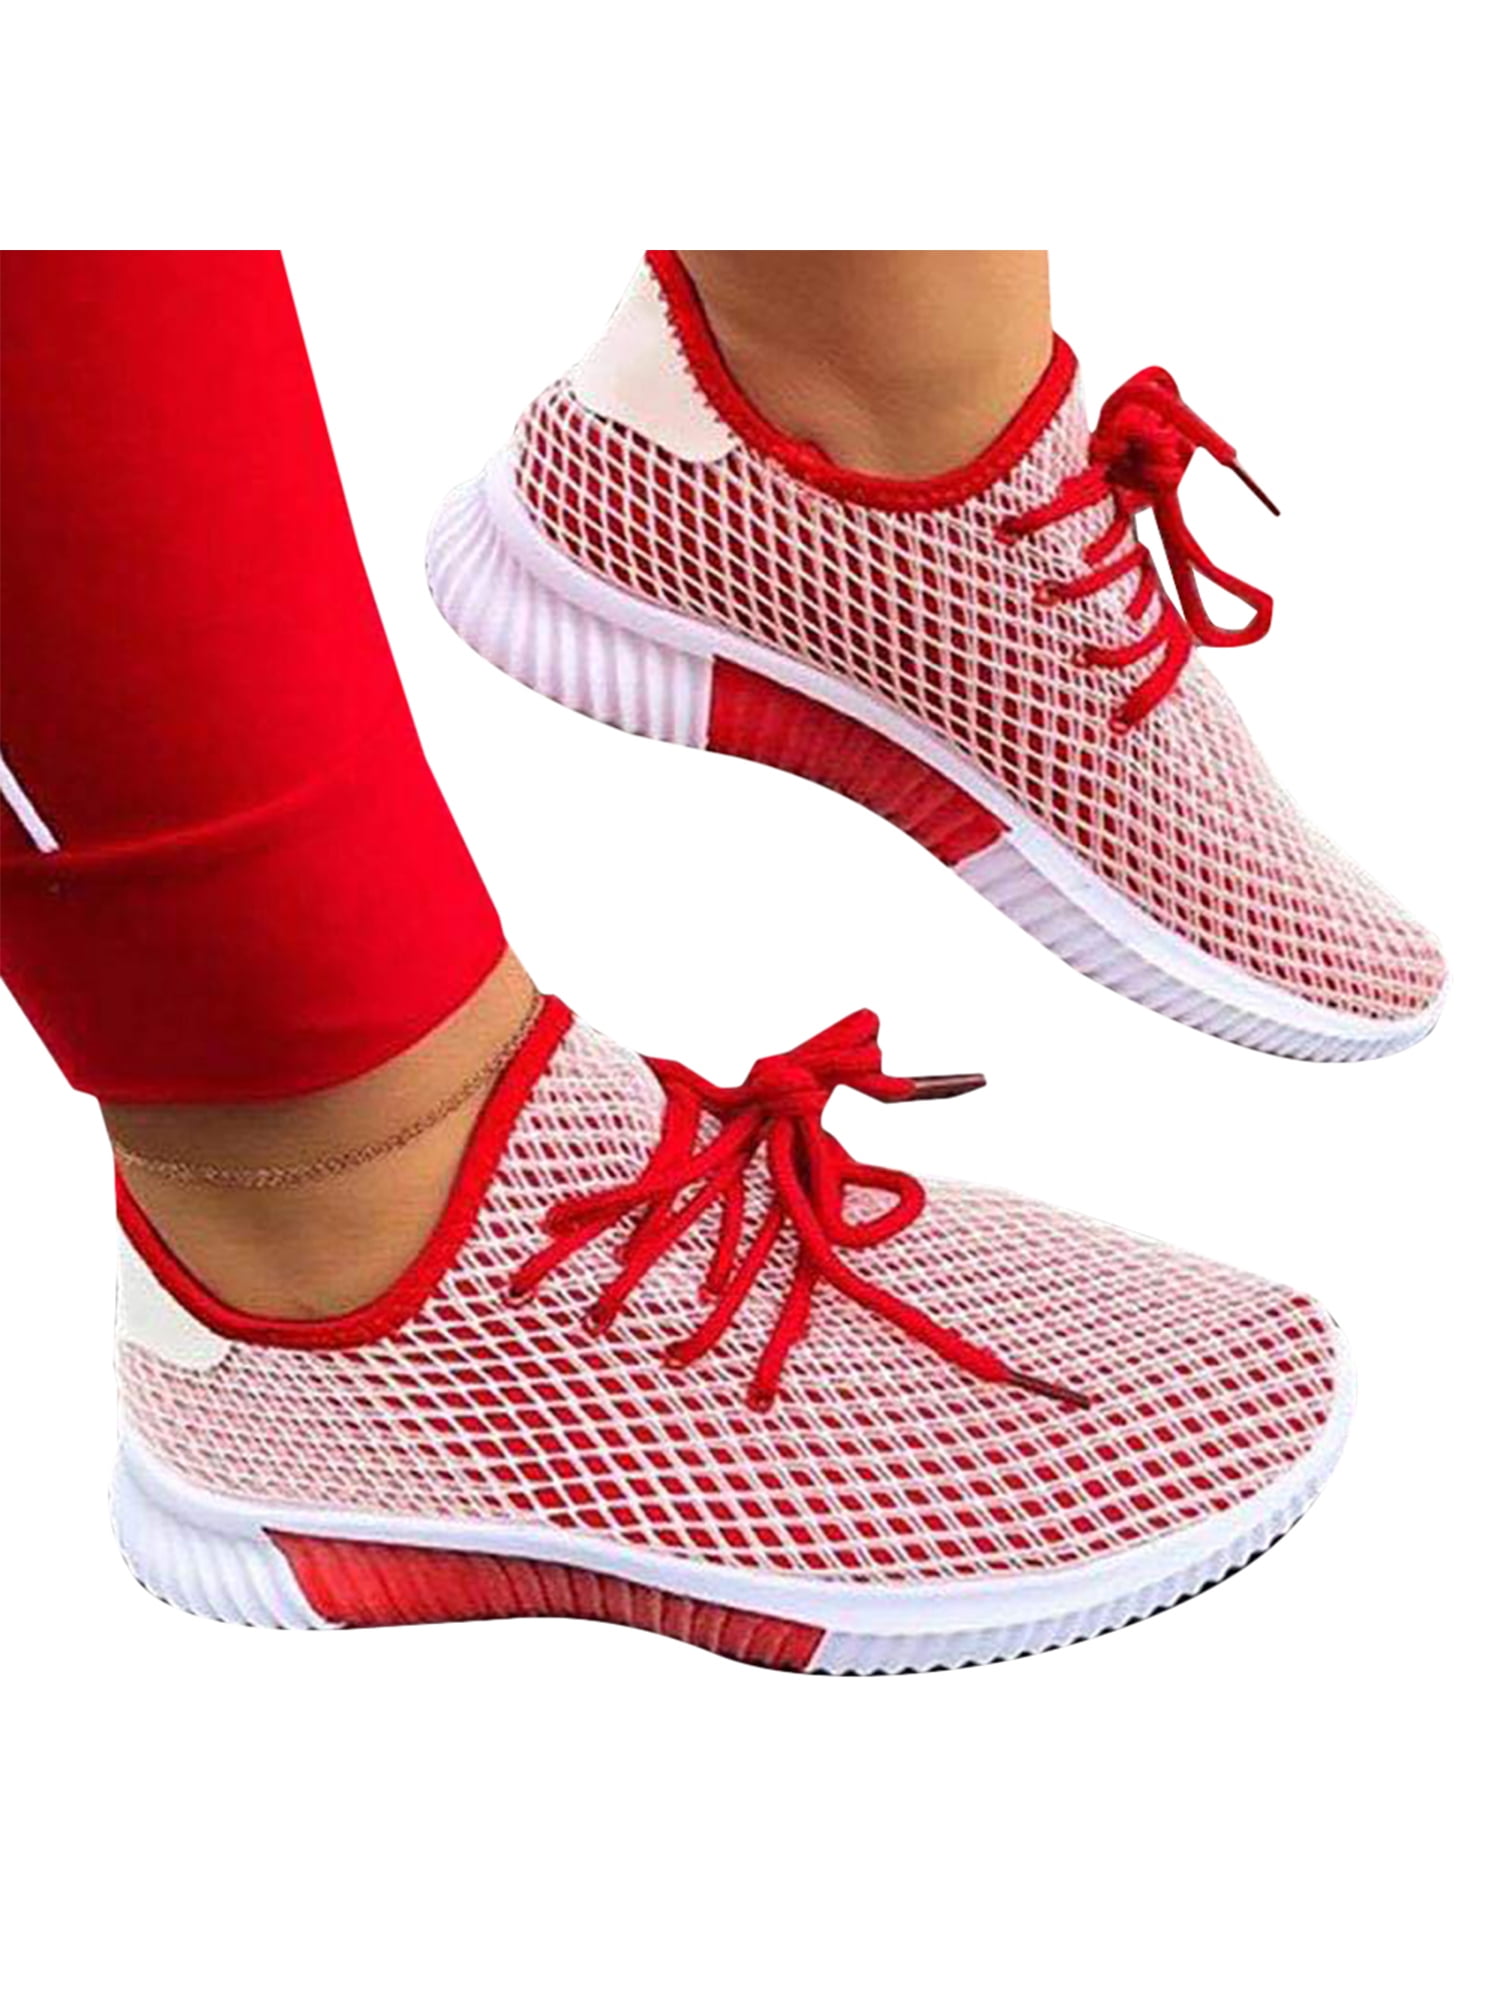 PZZ BEACH Athletic Walking Running Shoes Casual Lightweight Mesh Sneaker Cute Fashion